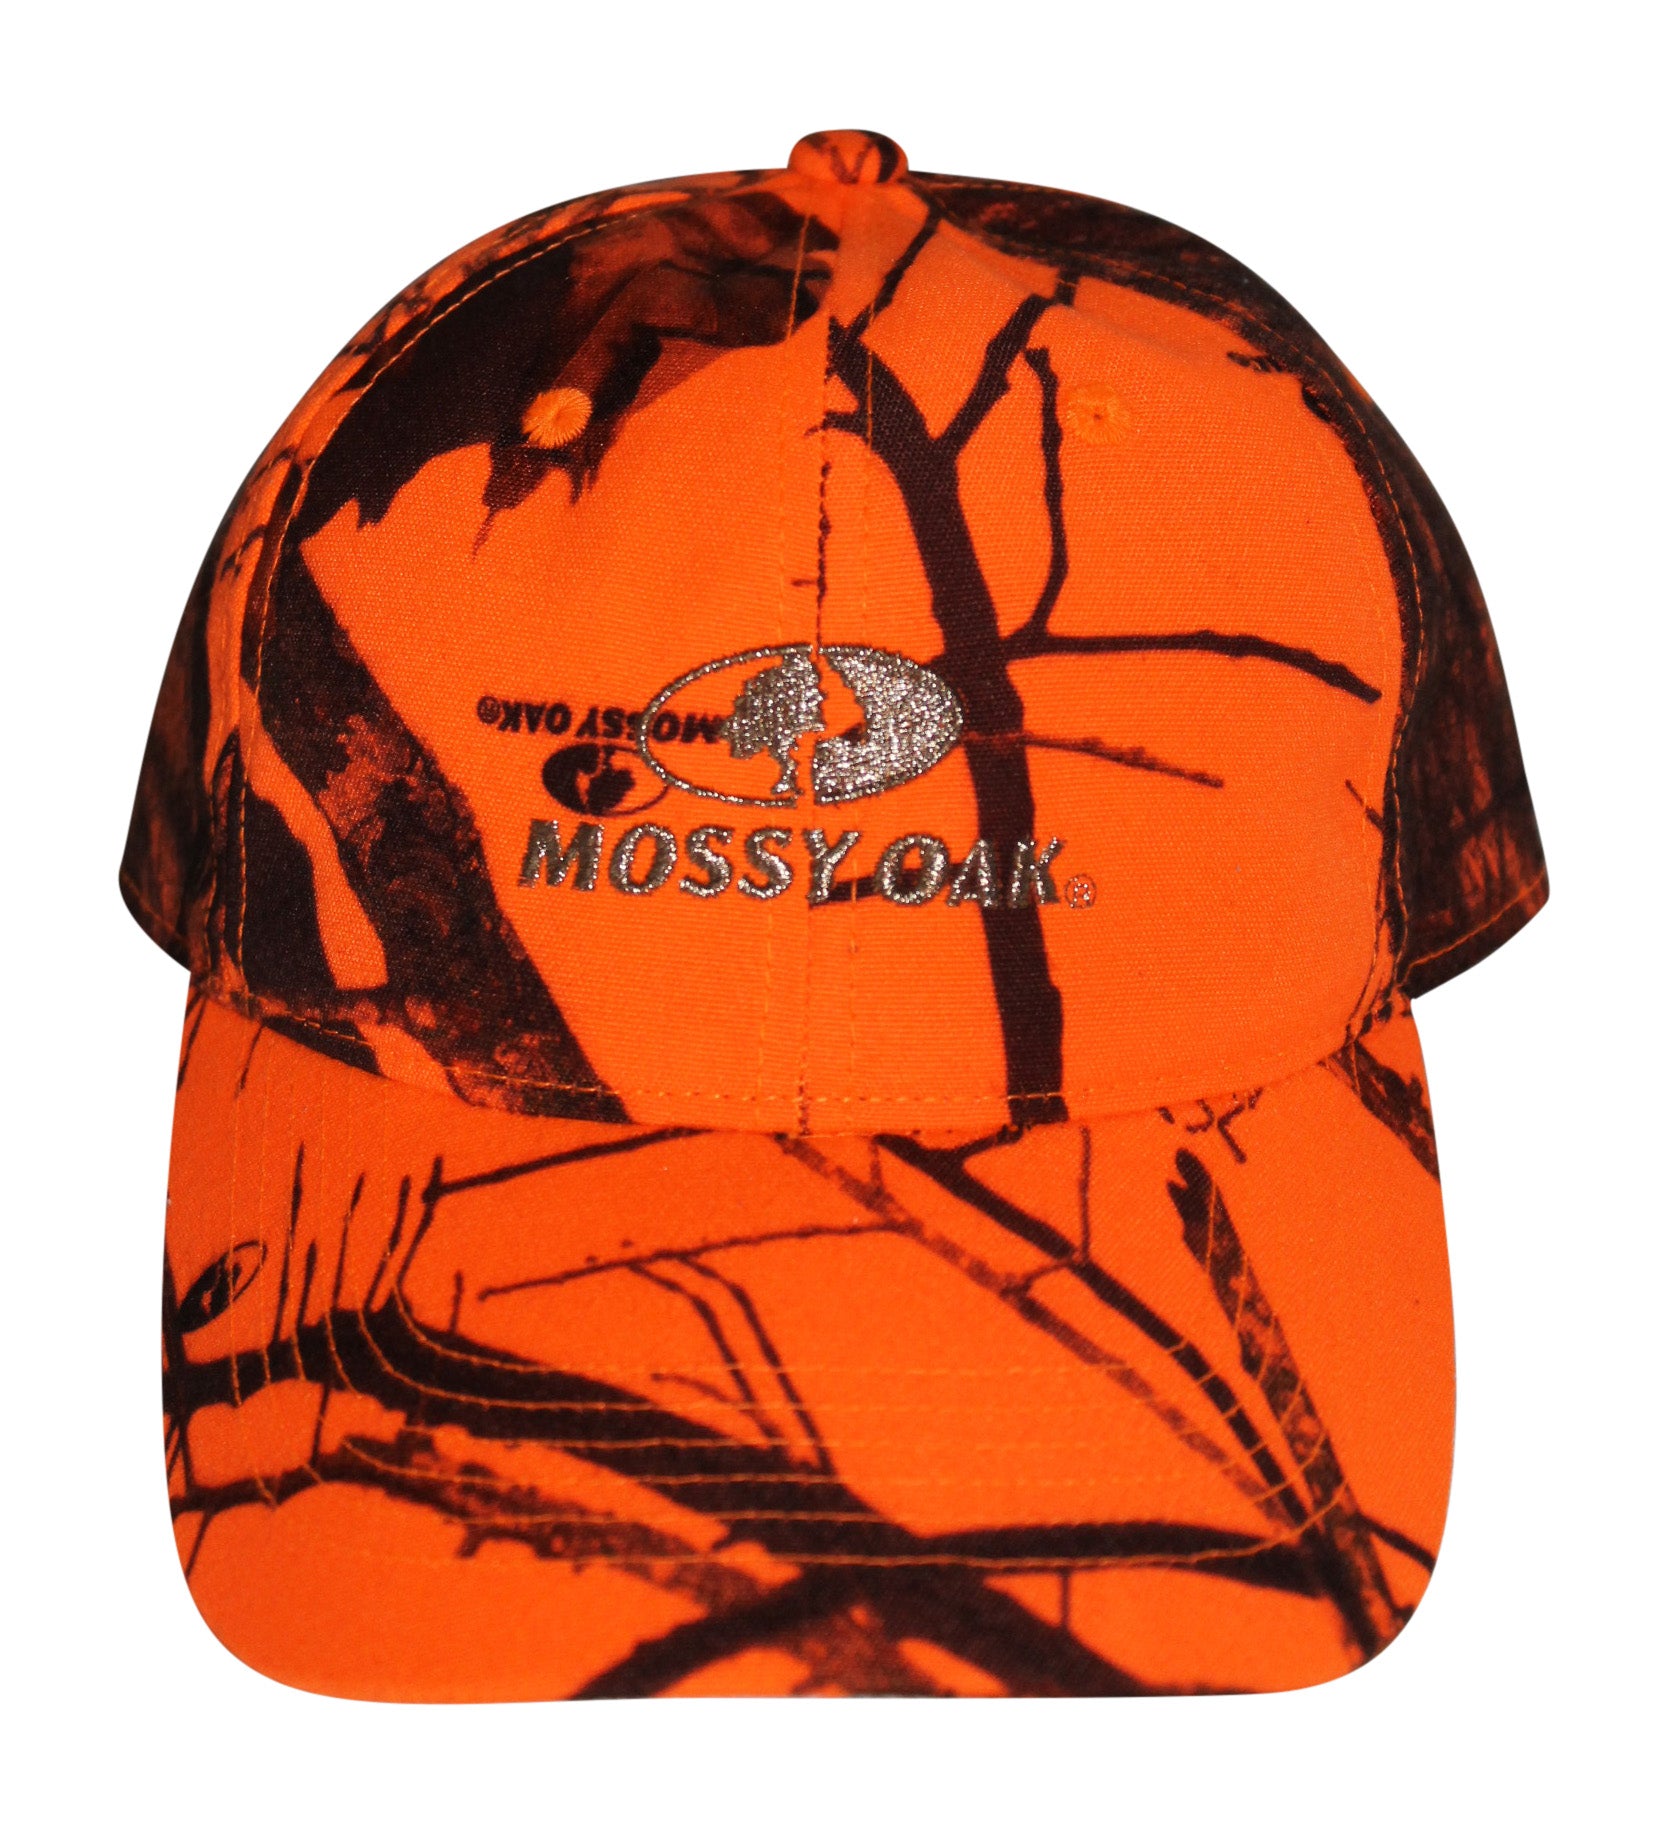 Mossy Oak Blaze Orange Camo Logo Cap, Unstructured, Unisex for Men